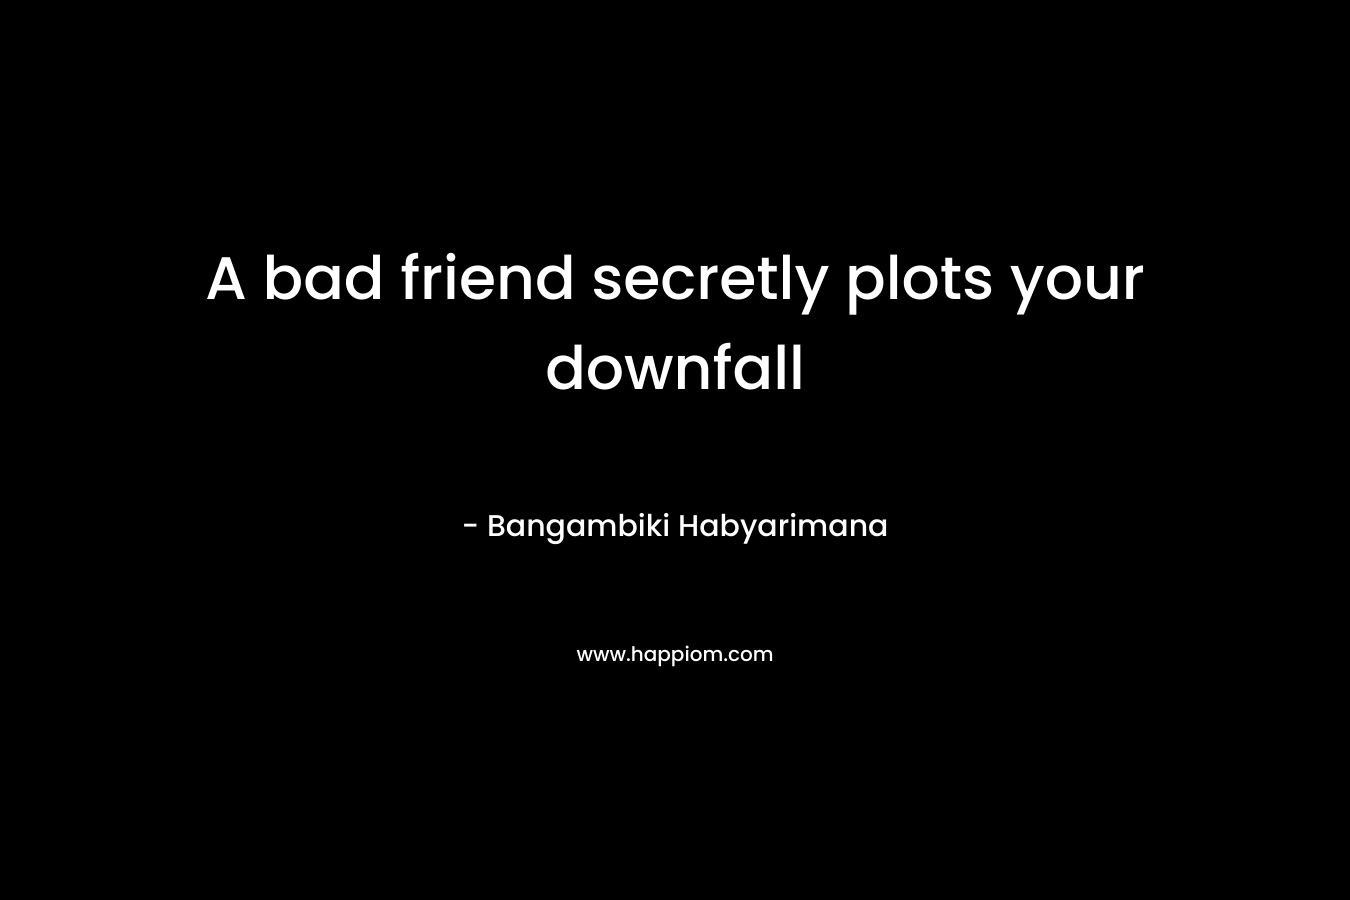 A bad friend secretly plots your downfall